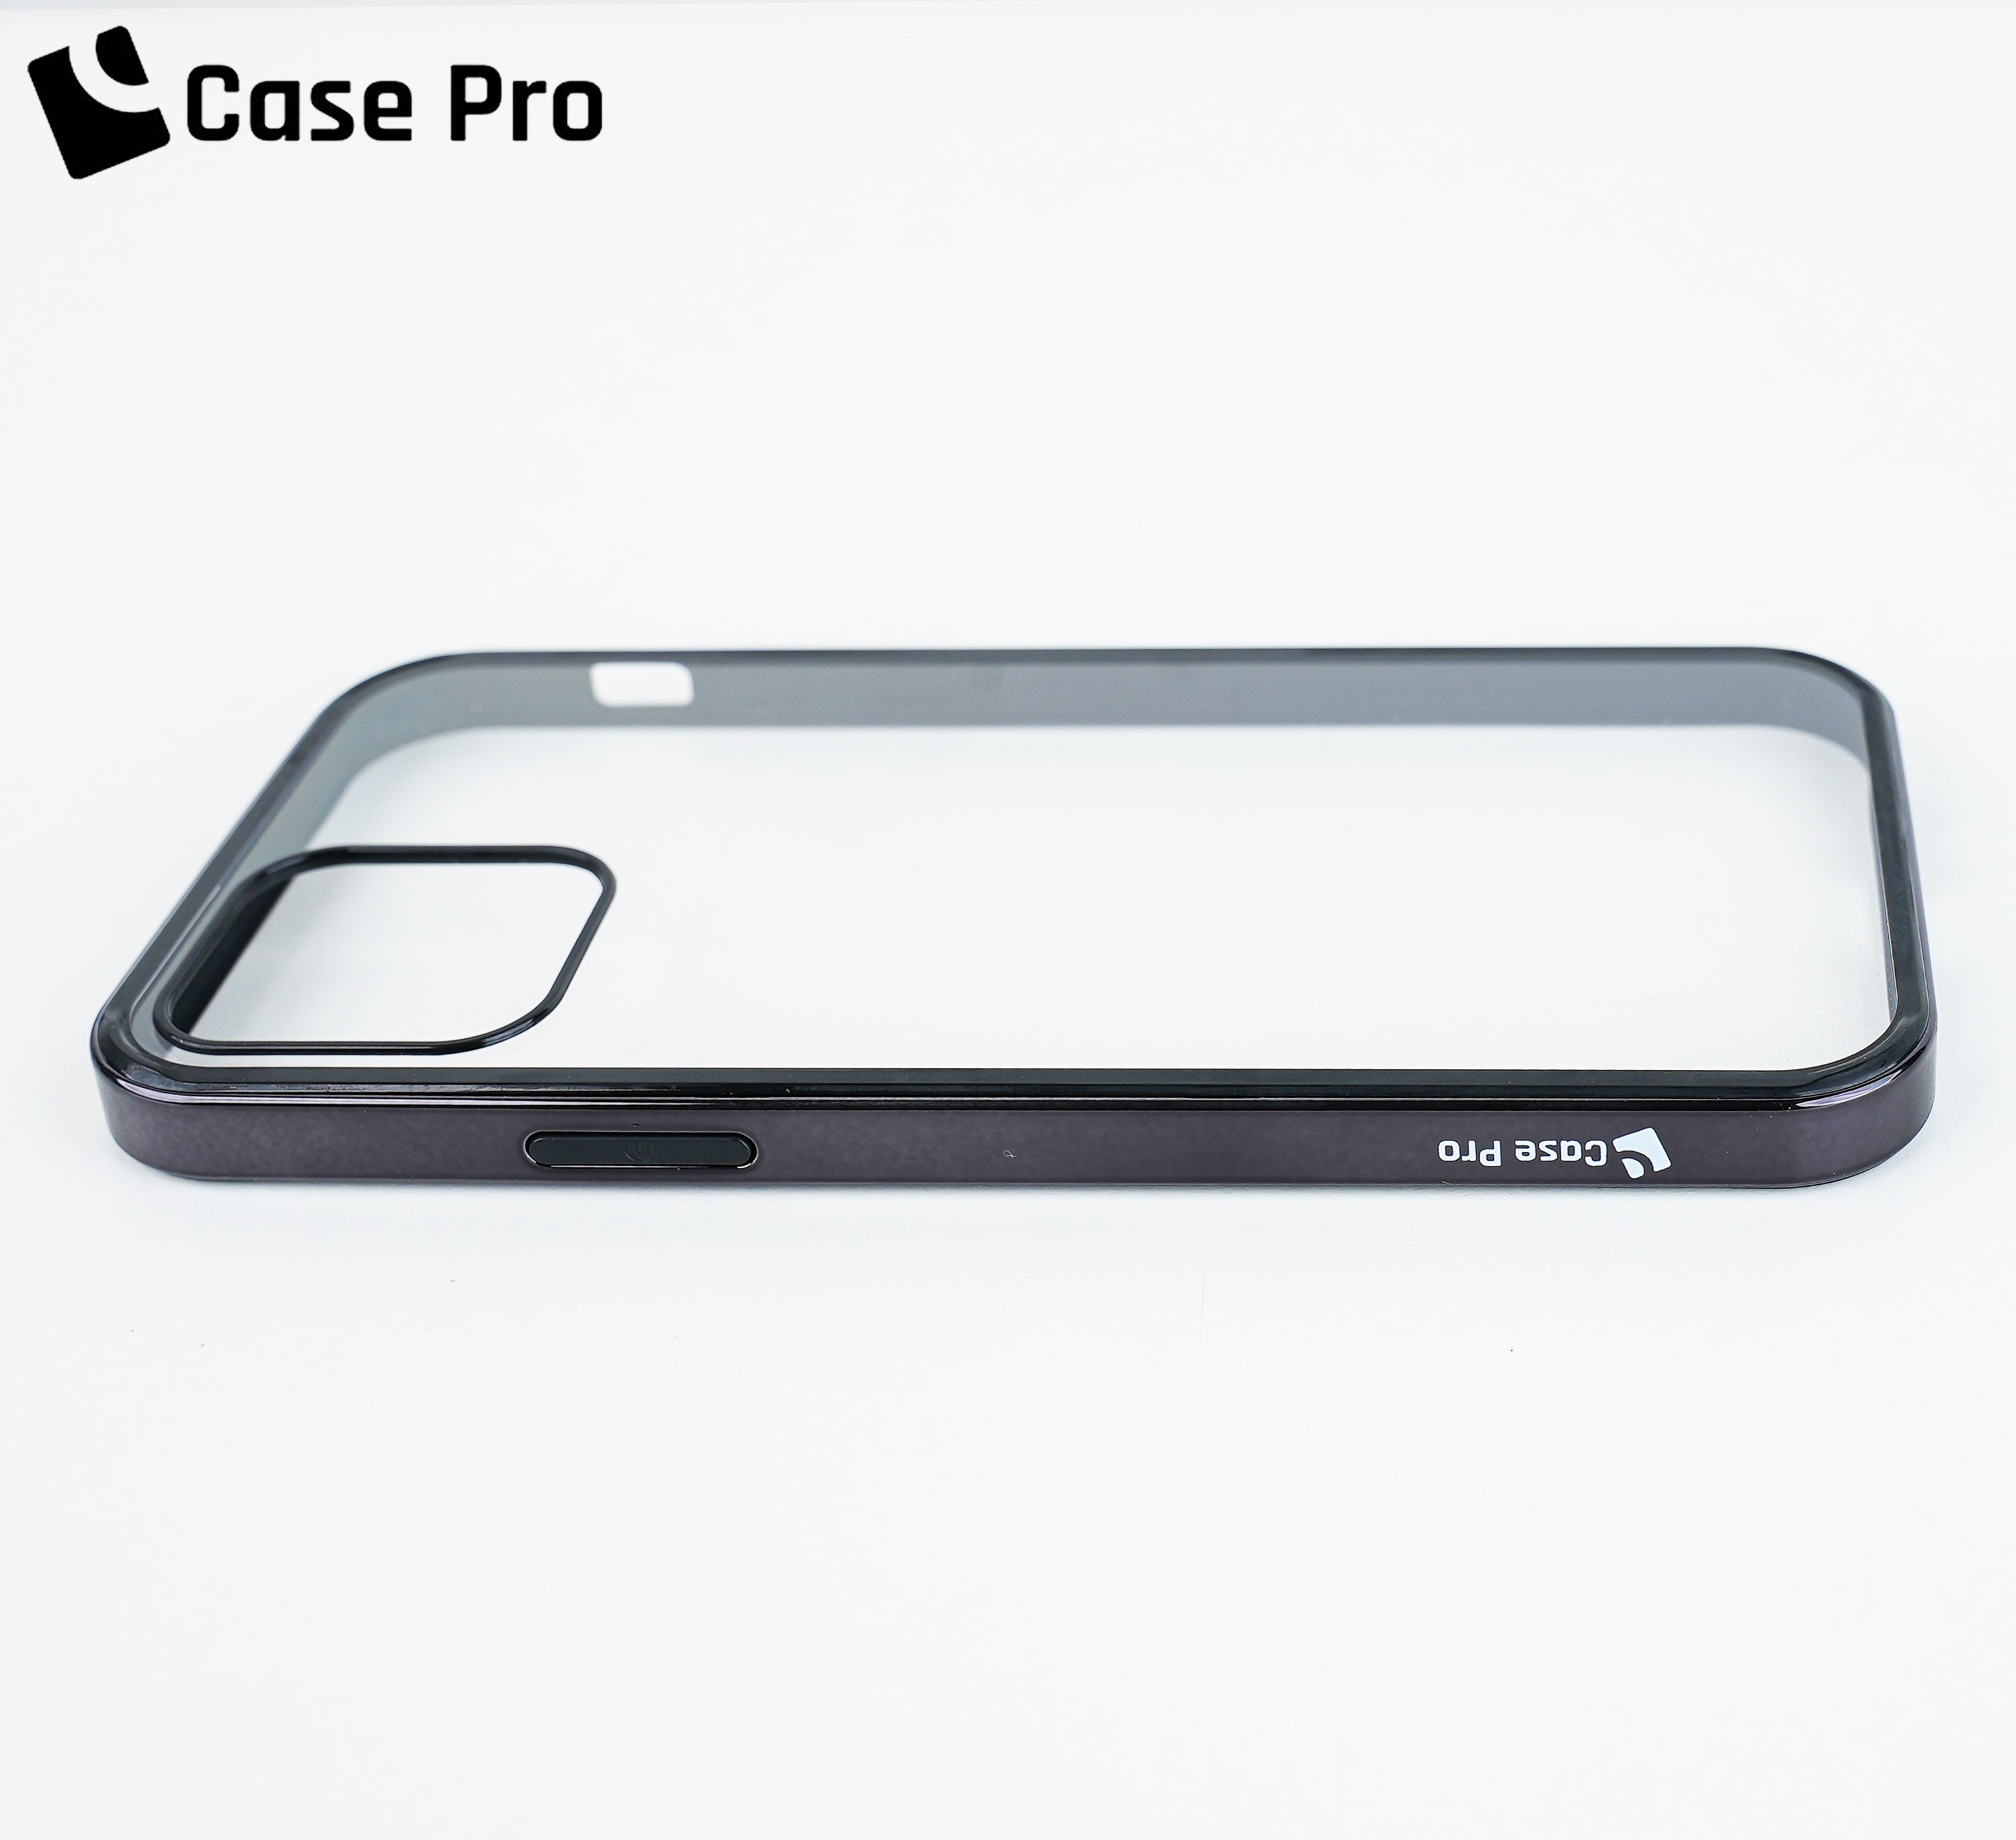 CASE PRO iPhone 12 Pro Max Case (Steel Bumper)